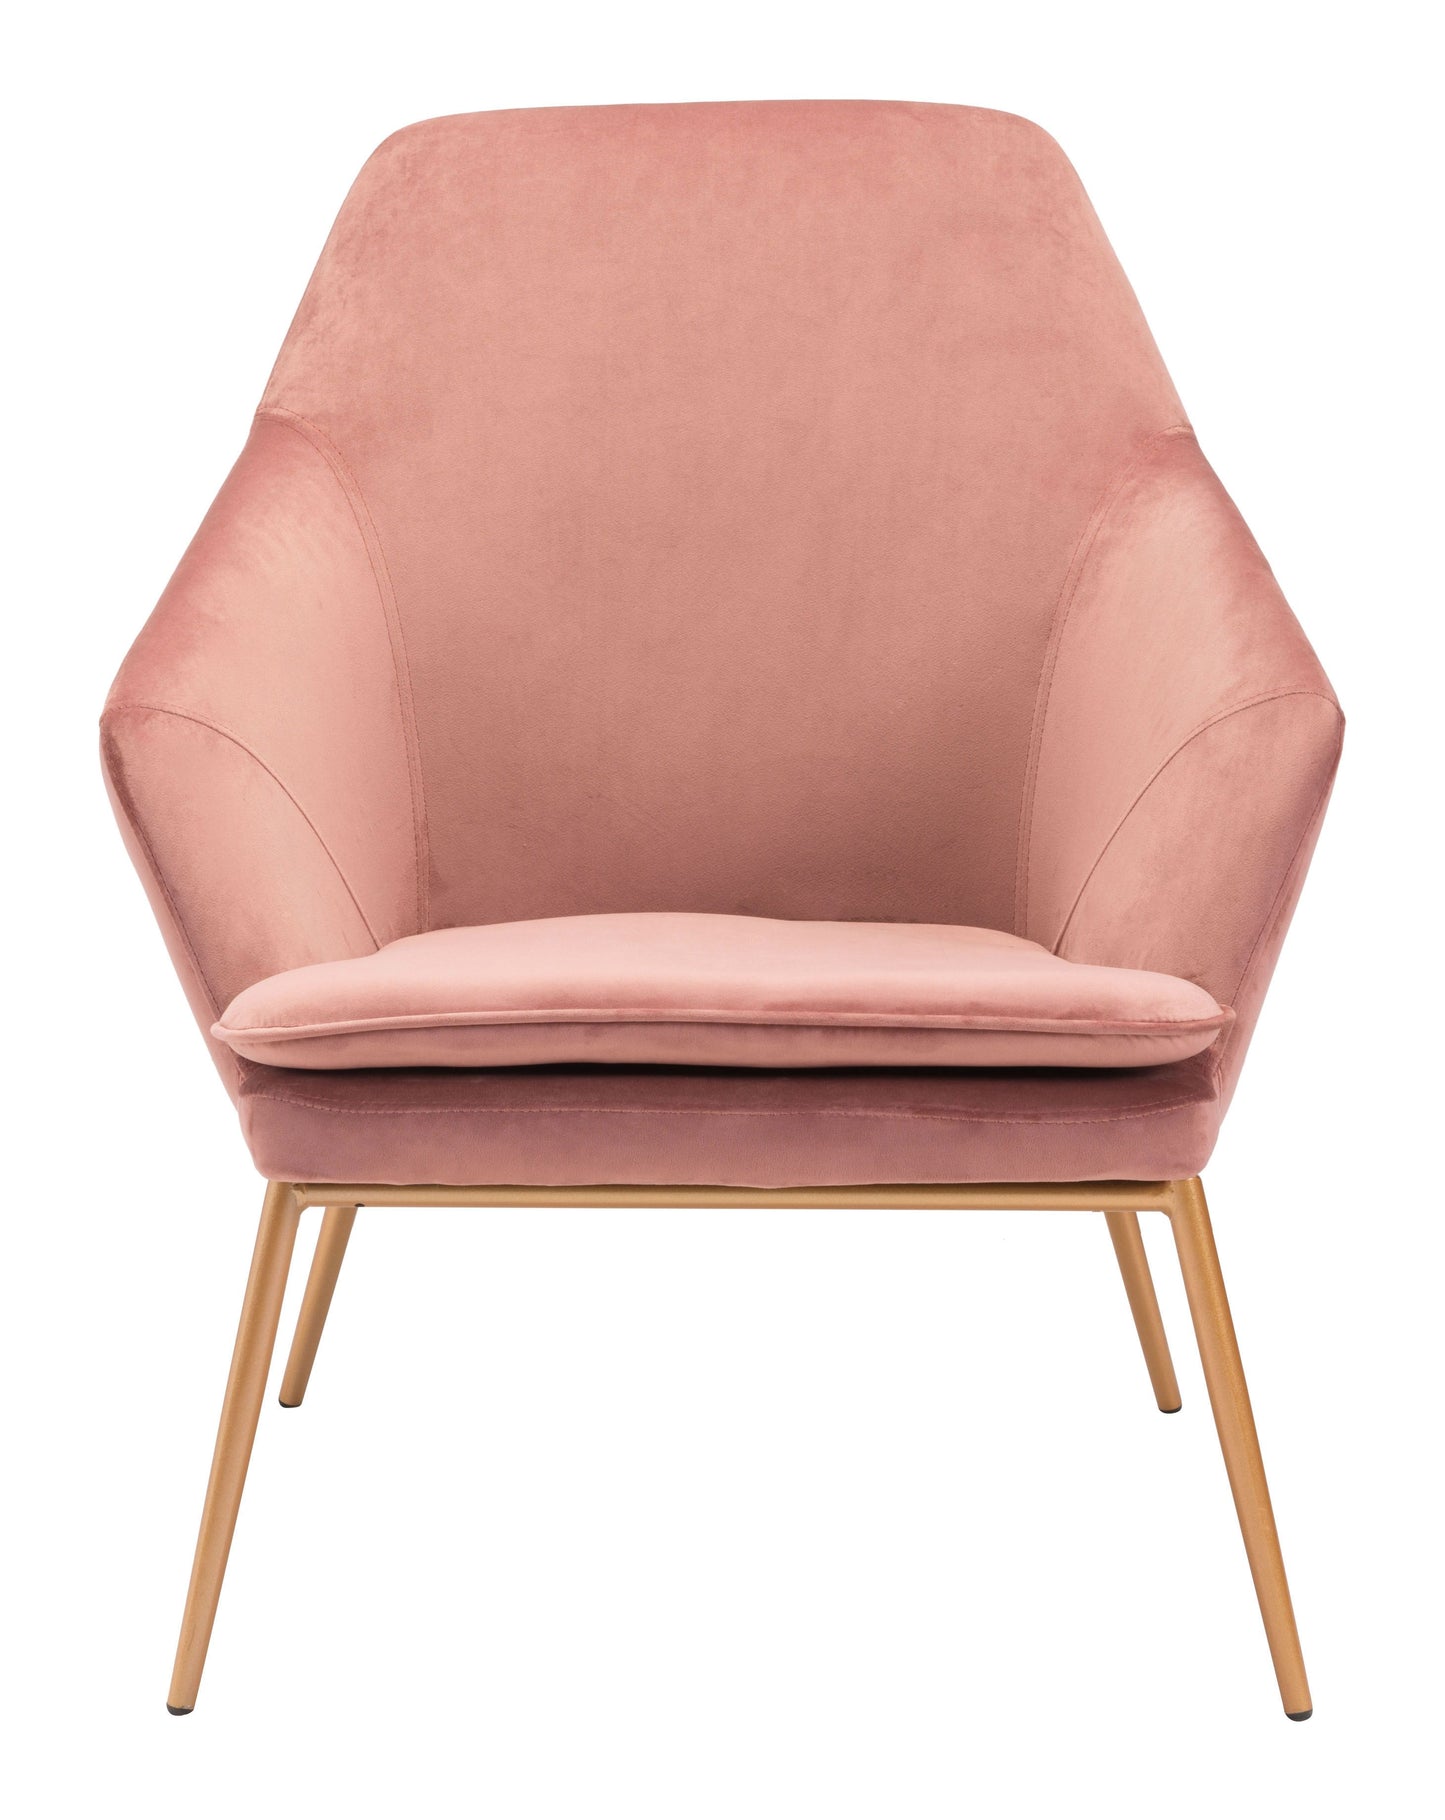 Debonair Arm Chair Pink & Gold